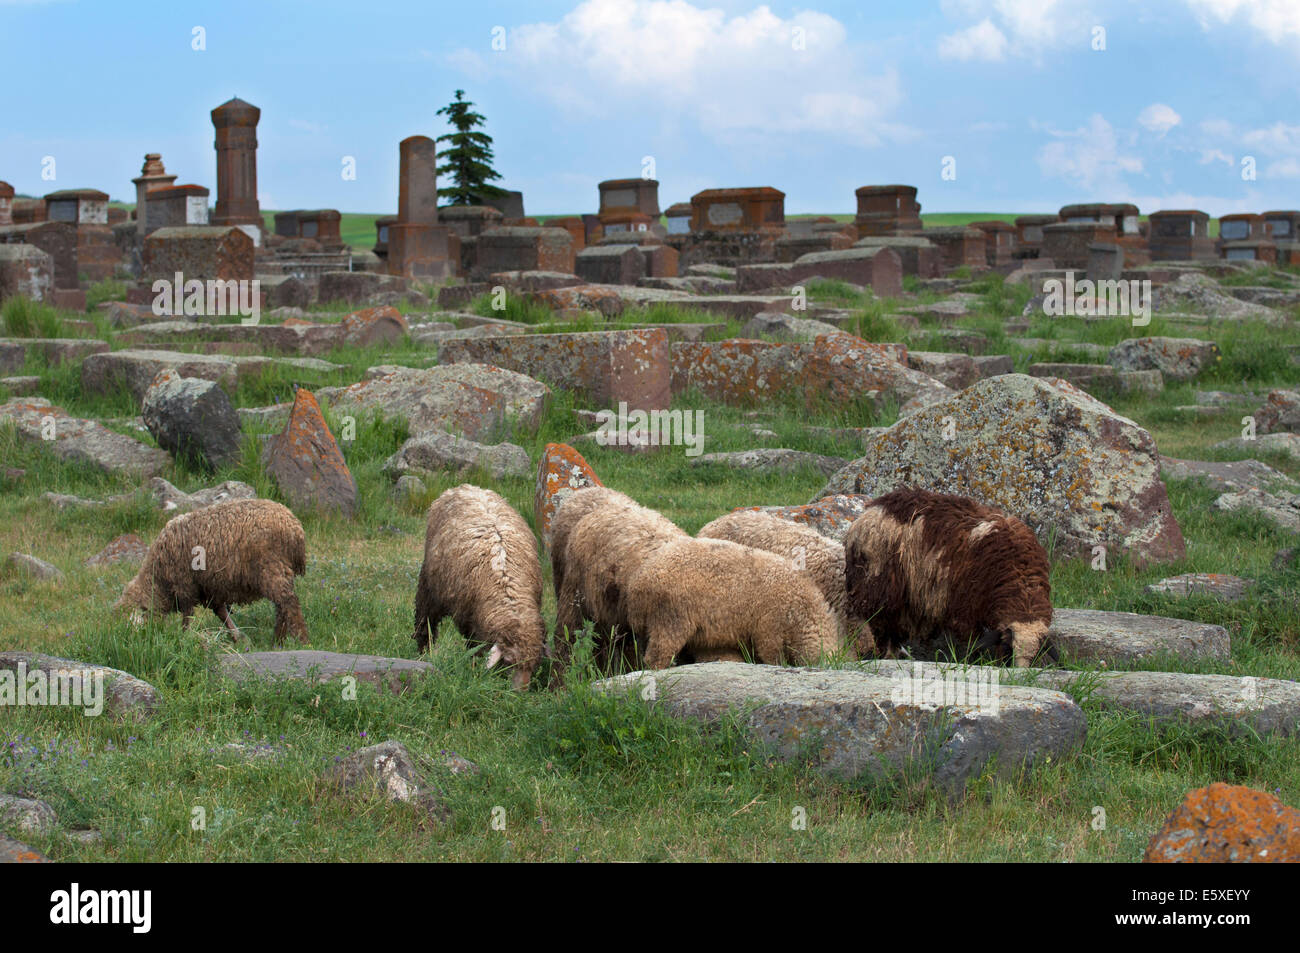 Sheep grazing among tombs, Noratus cemetery, Armenia Stock Photo